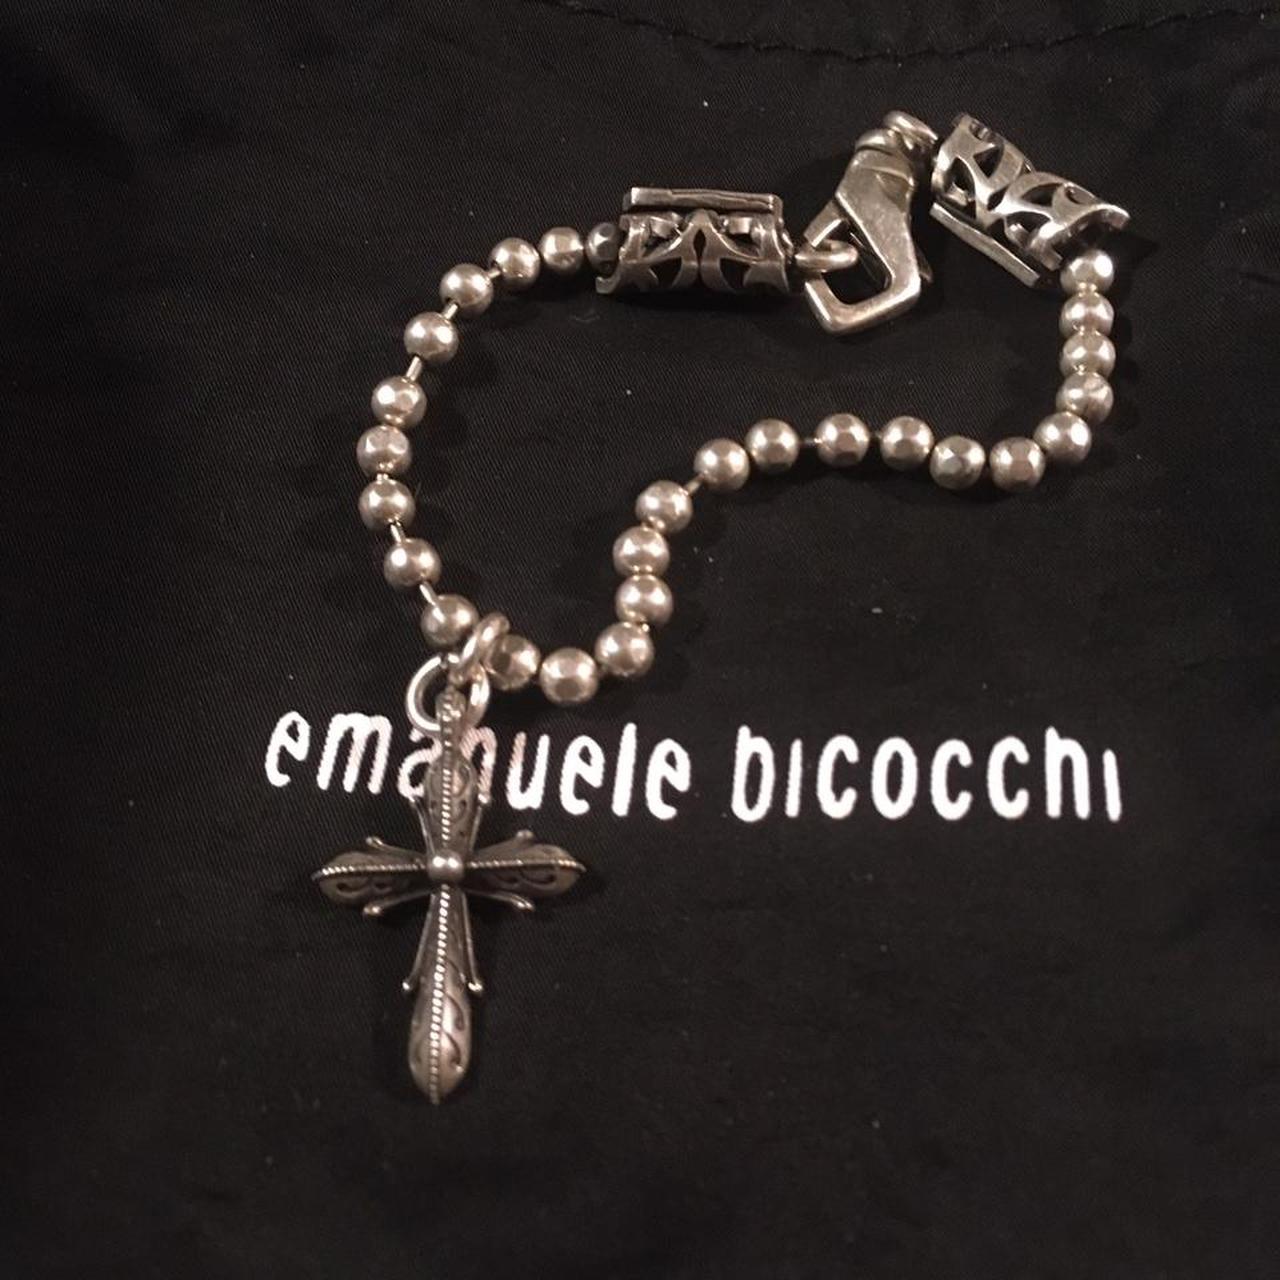 Product Image 1 - Emanuele Biccochi cross bracelet pendant

#jewelry